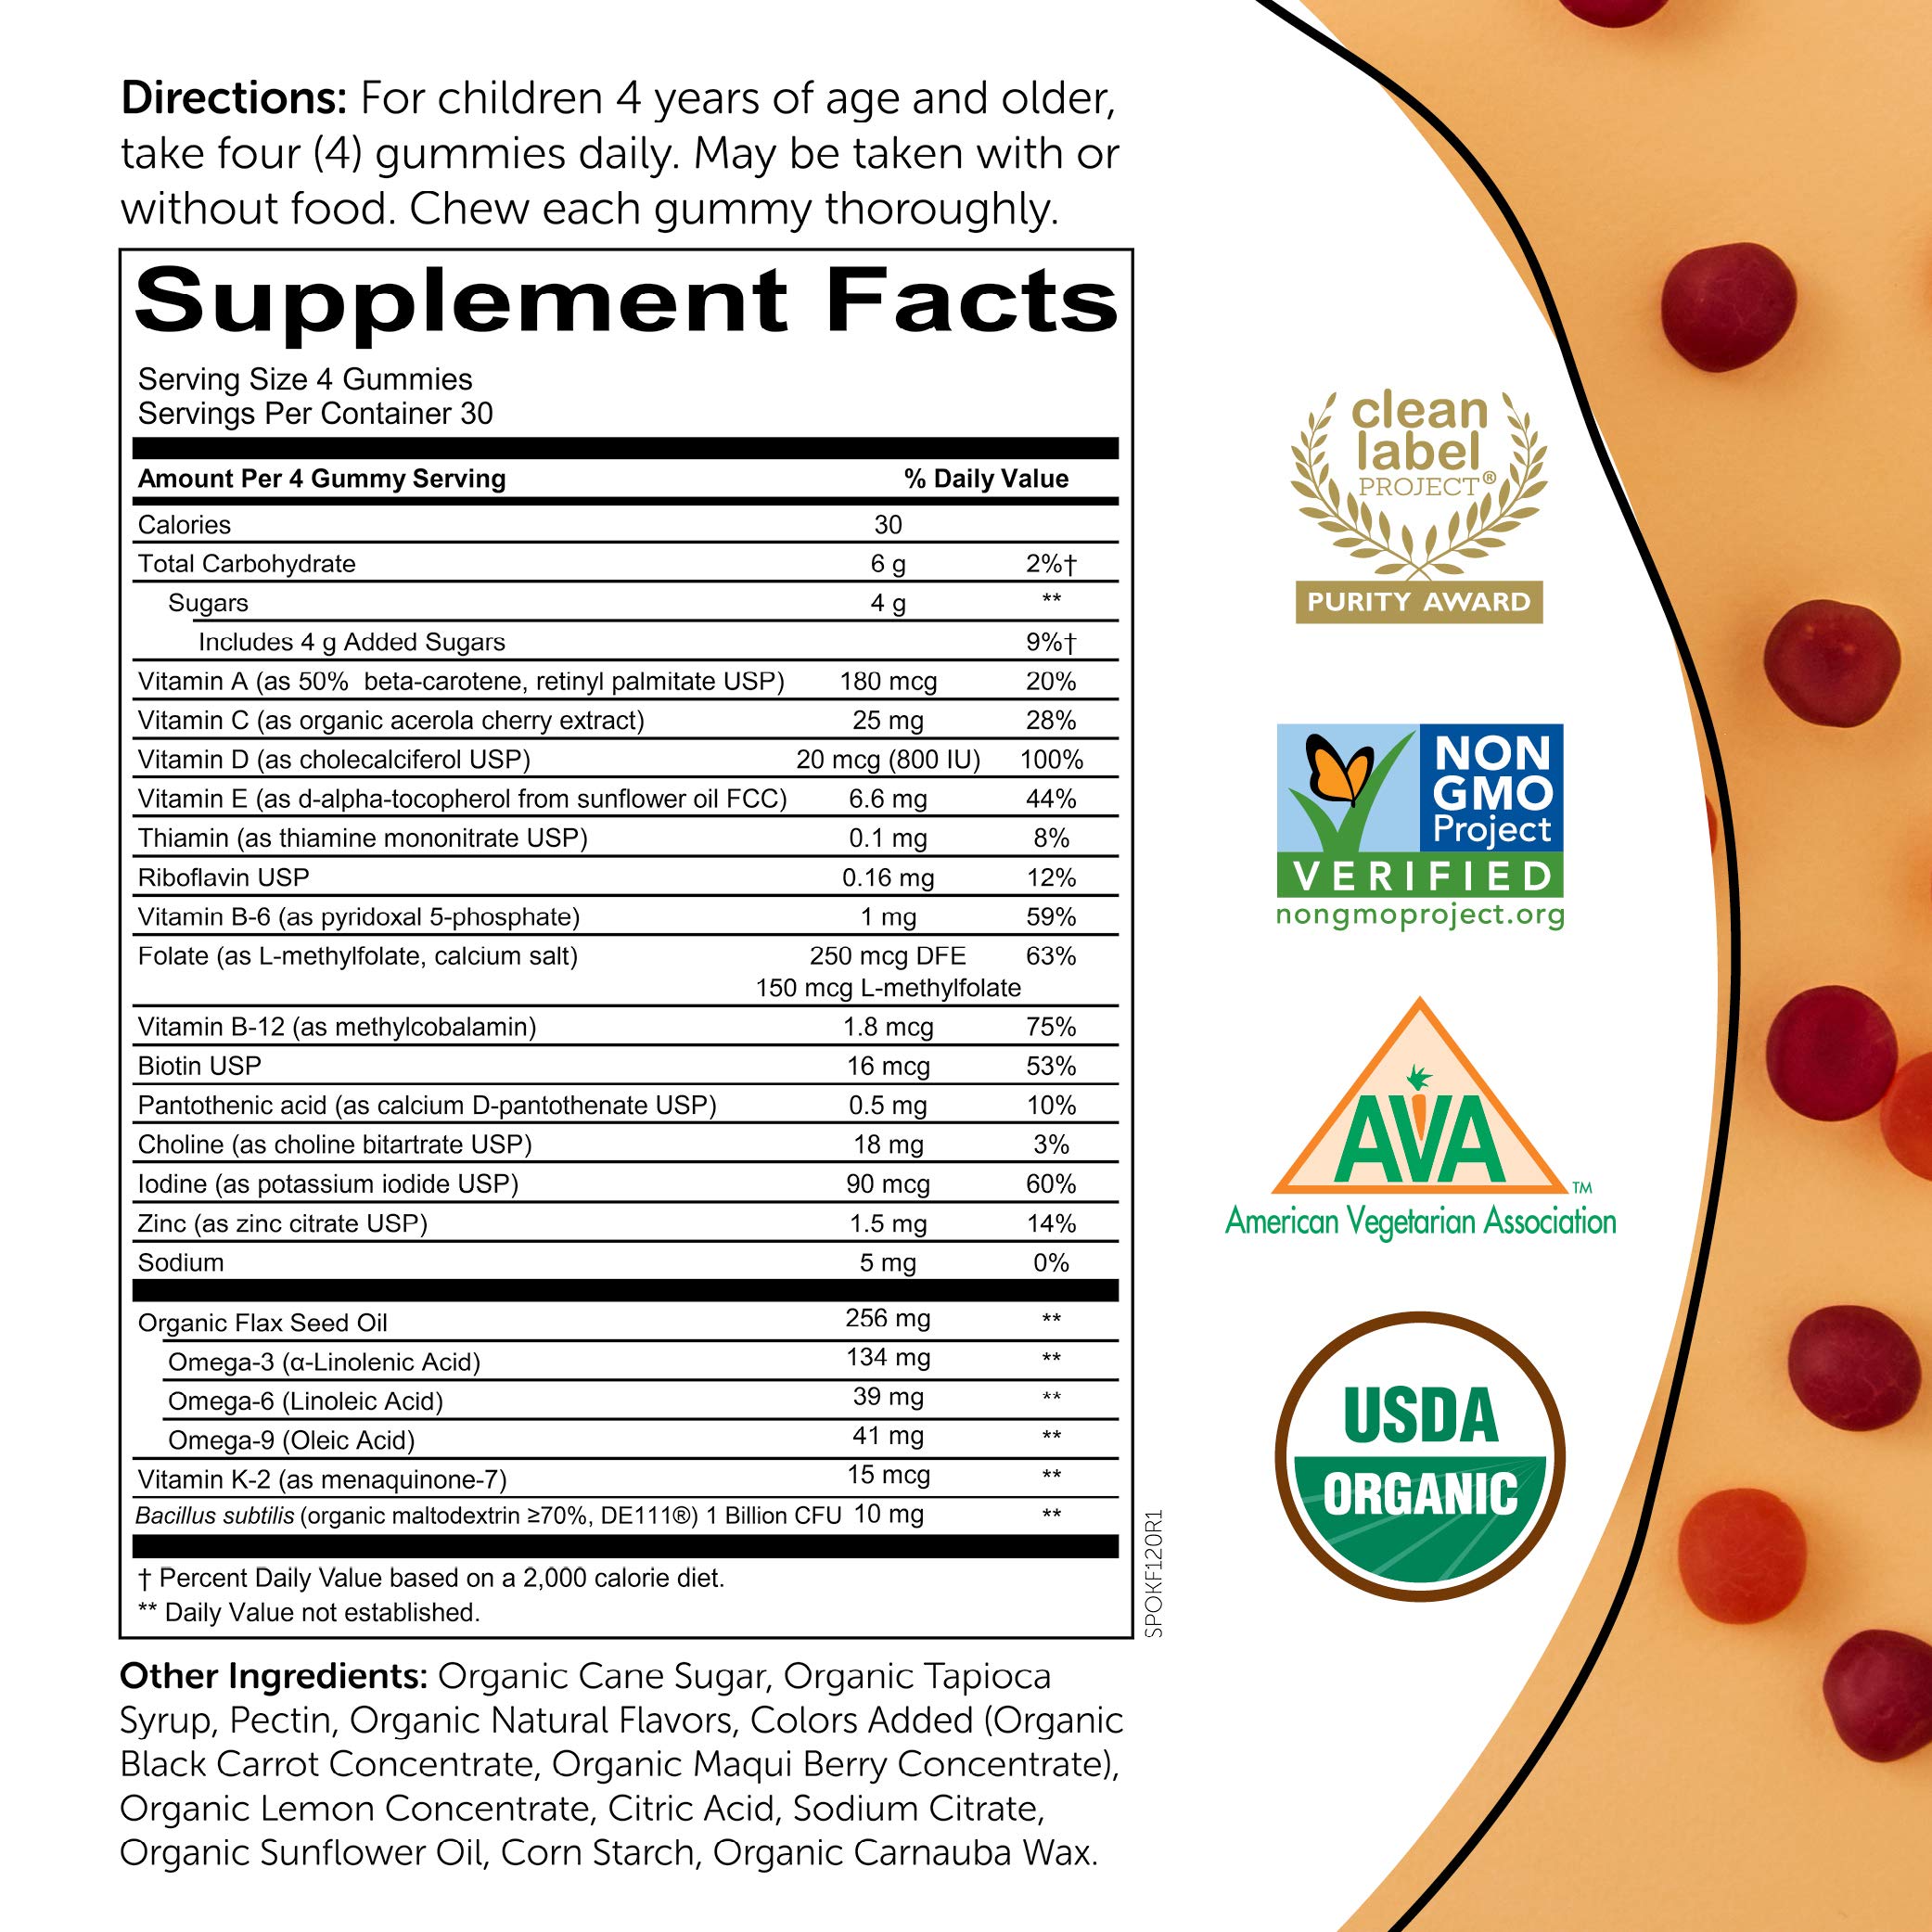 SmartyPants Organic Kids Multivitamin, Daily Gummy Vitamins: Probiotics, Vitamin C, D3, Zinc, & B12 for Immune Support, Energy & Digestive Health, Assorted Fruit Flavor, 120 Gummies, 30 Day Supply